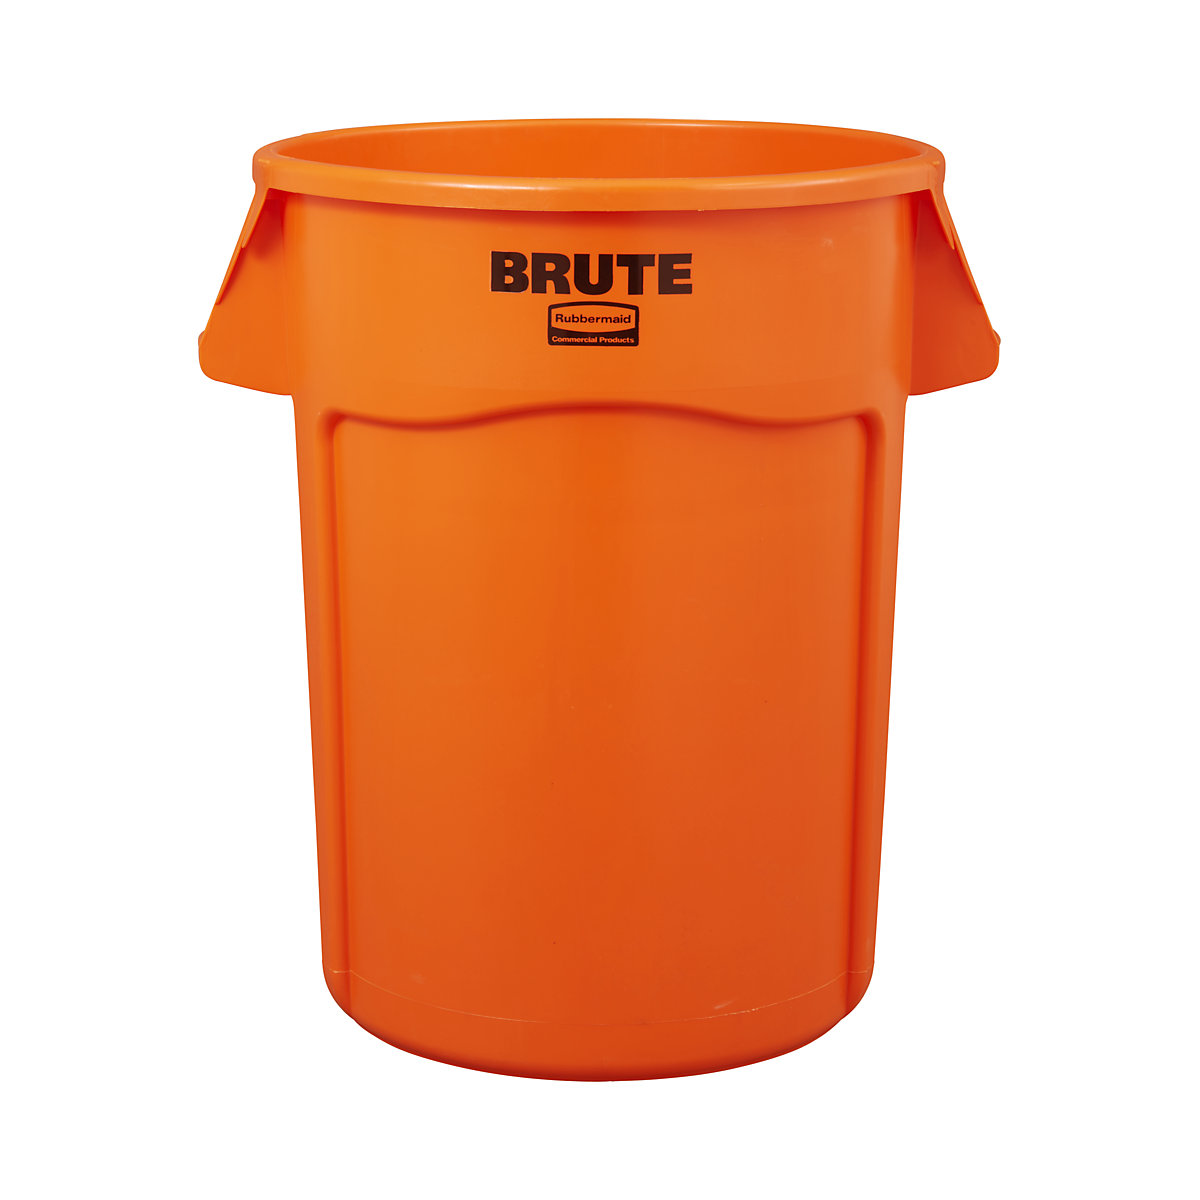 Univerzalni kontejner BRUTE®, okrugli – Rubbermaid, sadržaj 121 l, u narančastoj boji-11